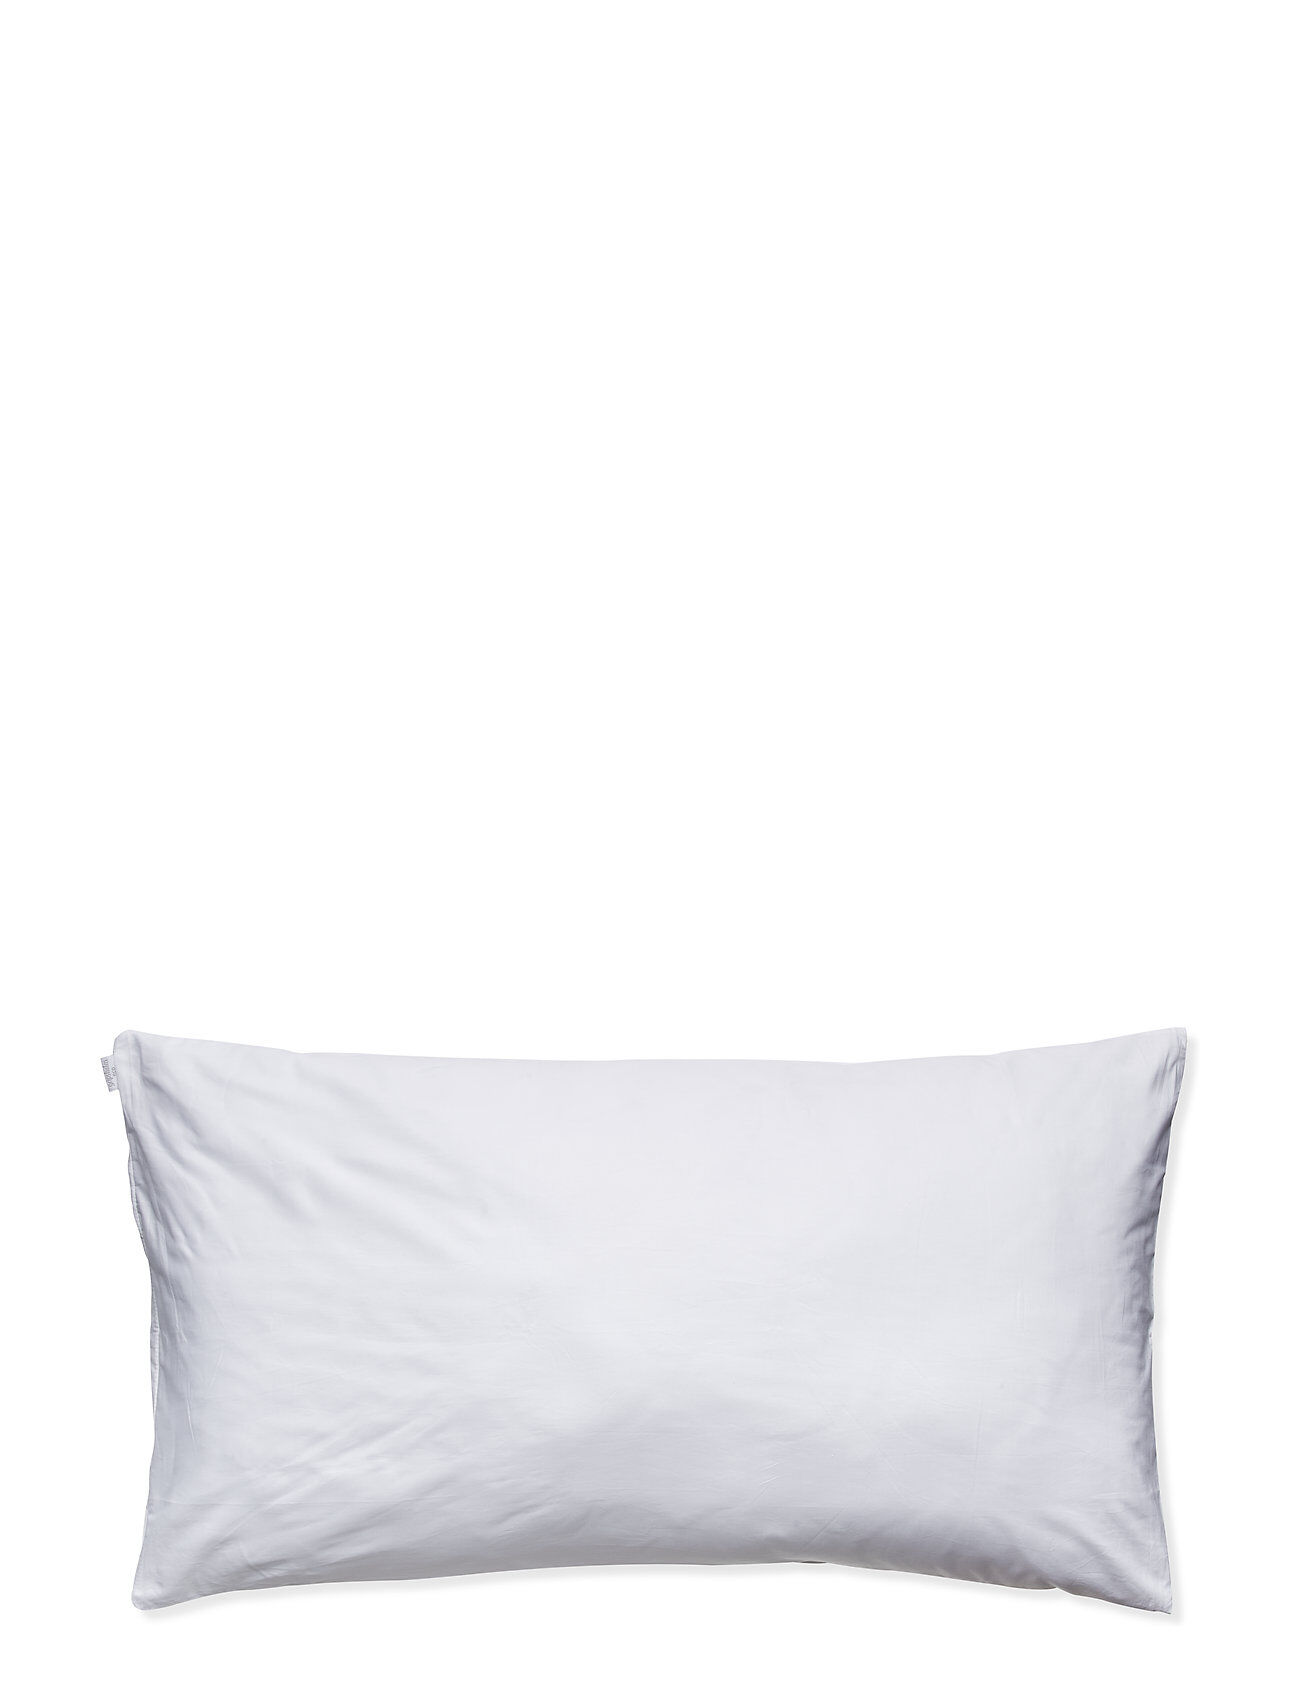 Gripsholm Pillowcase Eco Percale Home Textiles Bedtextiles Pillow Cases Hvit Gripsholm